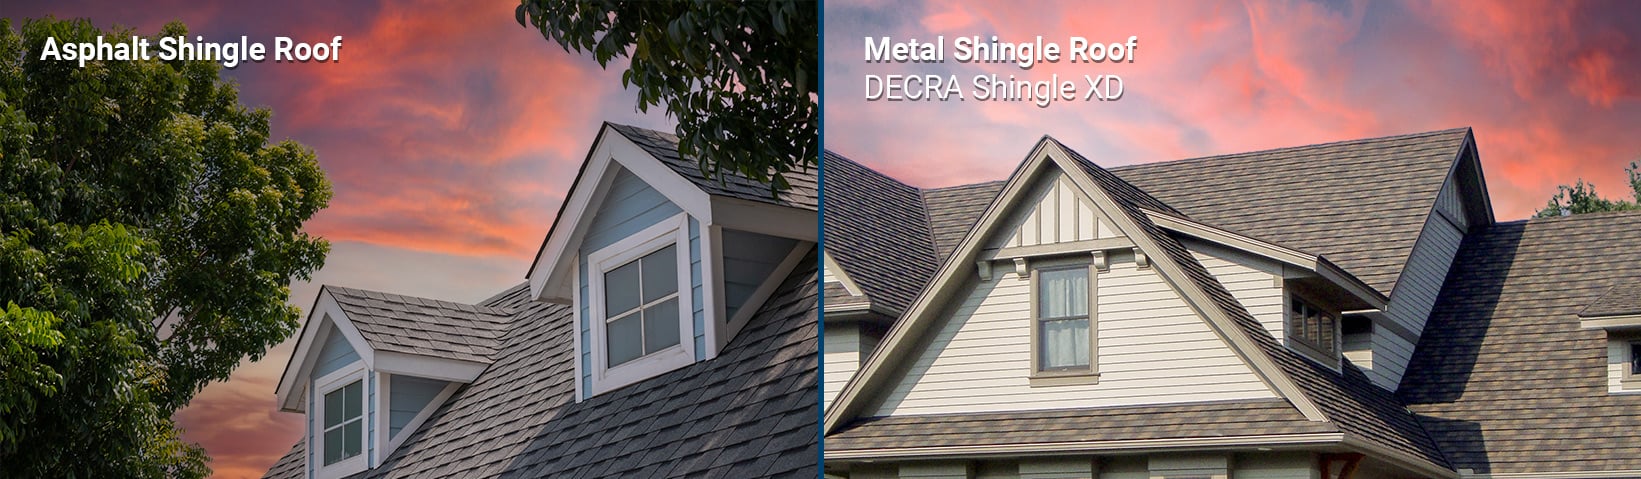 decra-metal-roofing-web-asphalt-vs-decra